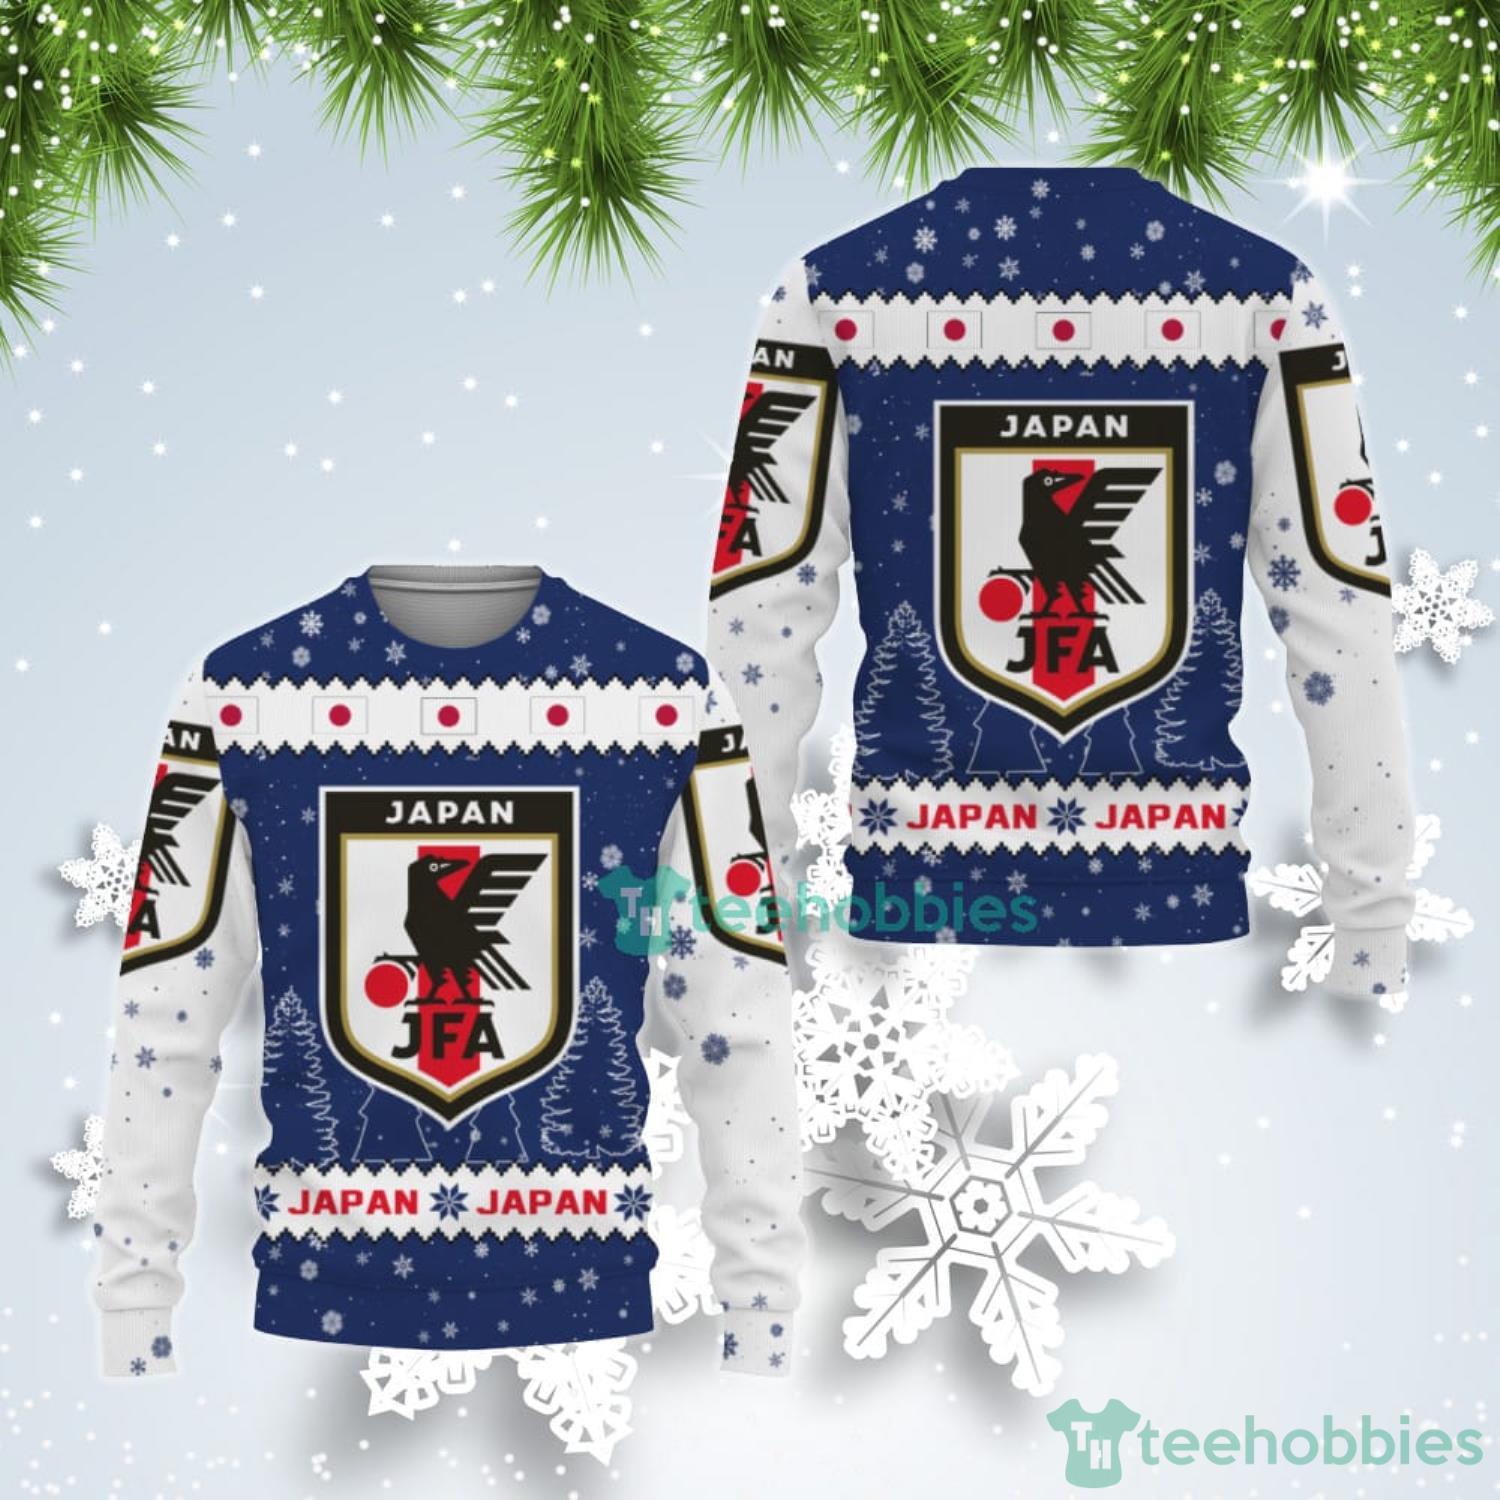 Japan National Soccer Team Qatar World Cup 2022 Winter Season Ugly Christmas Sweater Product Photo 1